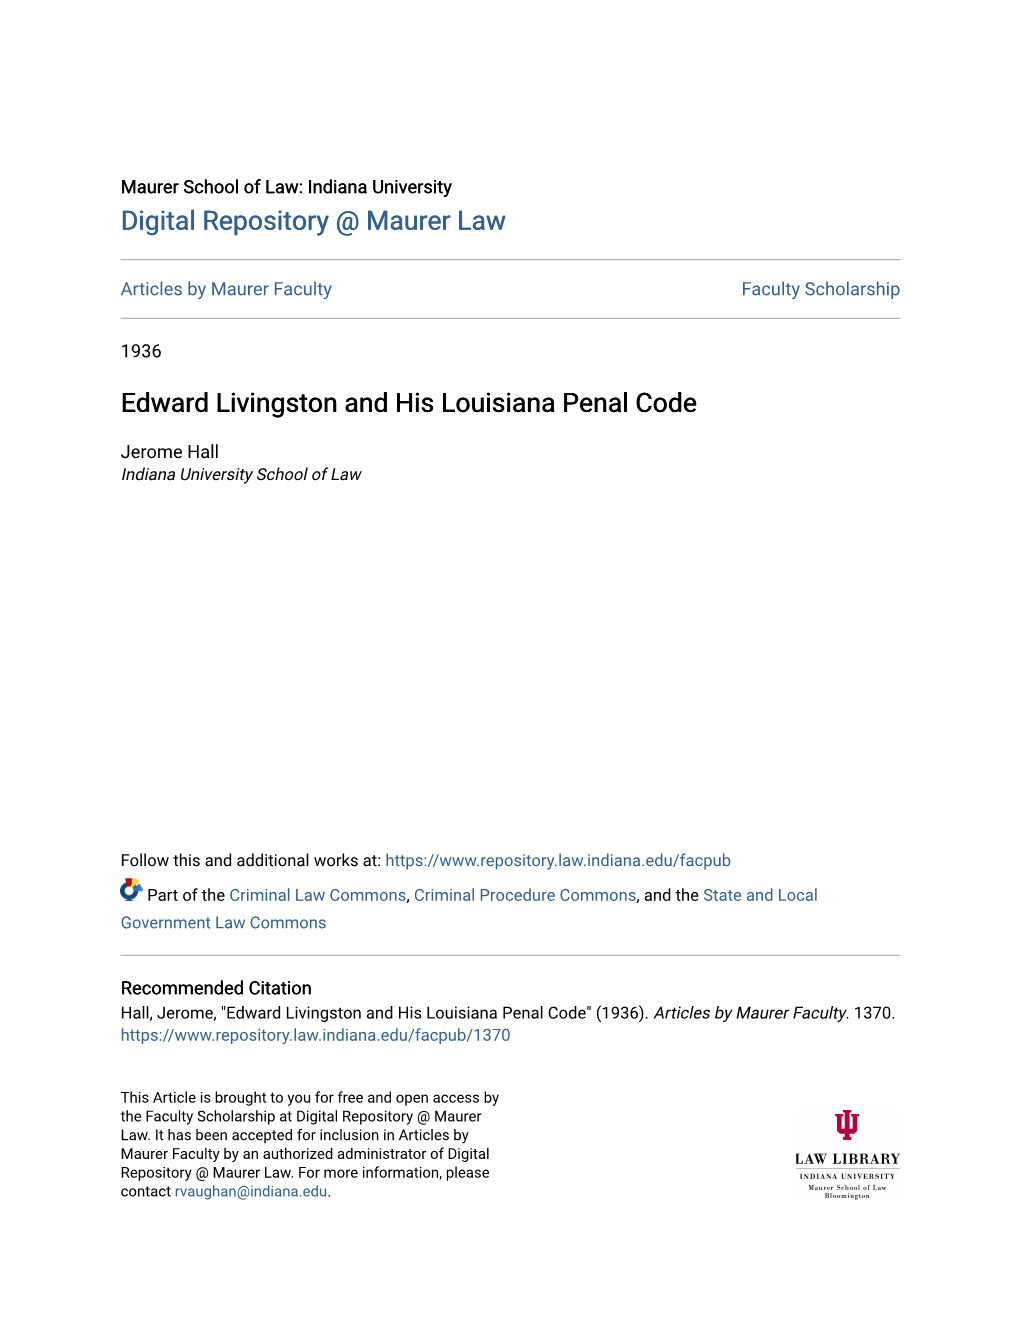 Edward Livingston and His Louisiana Penal Code